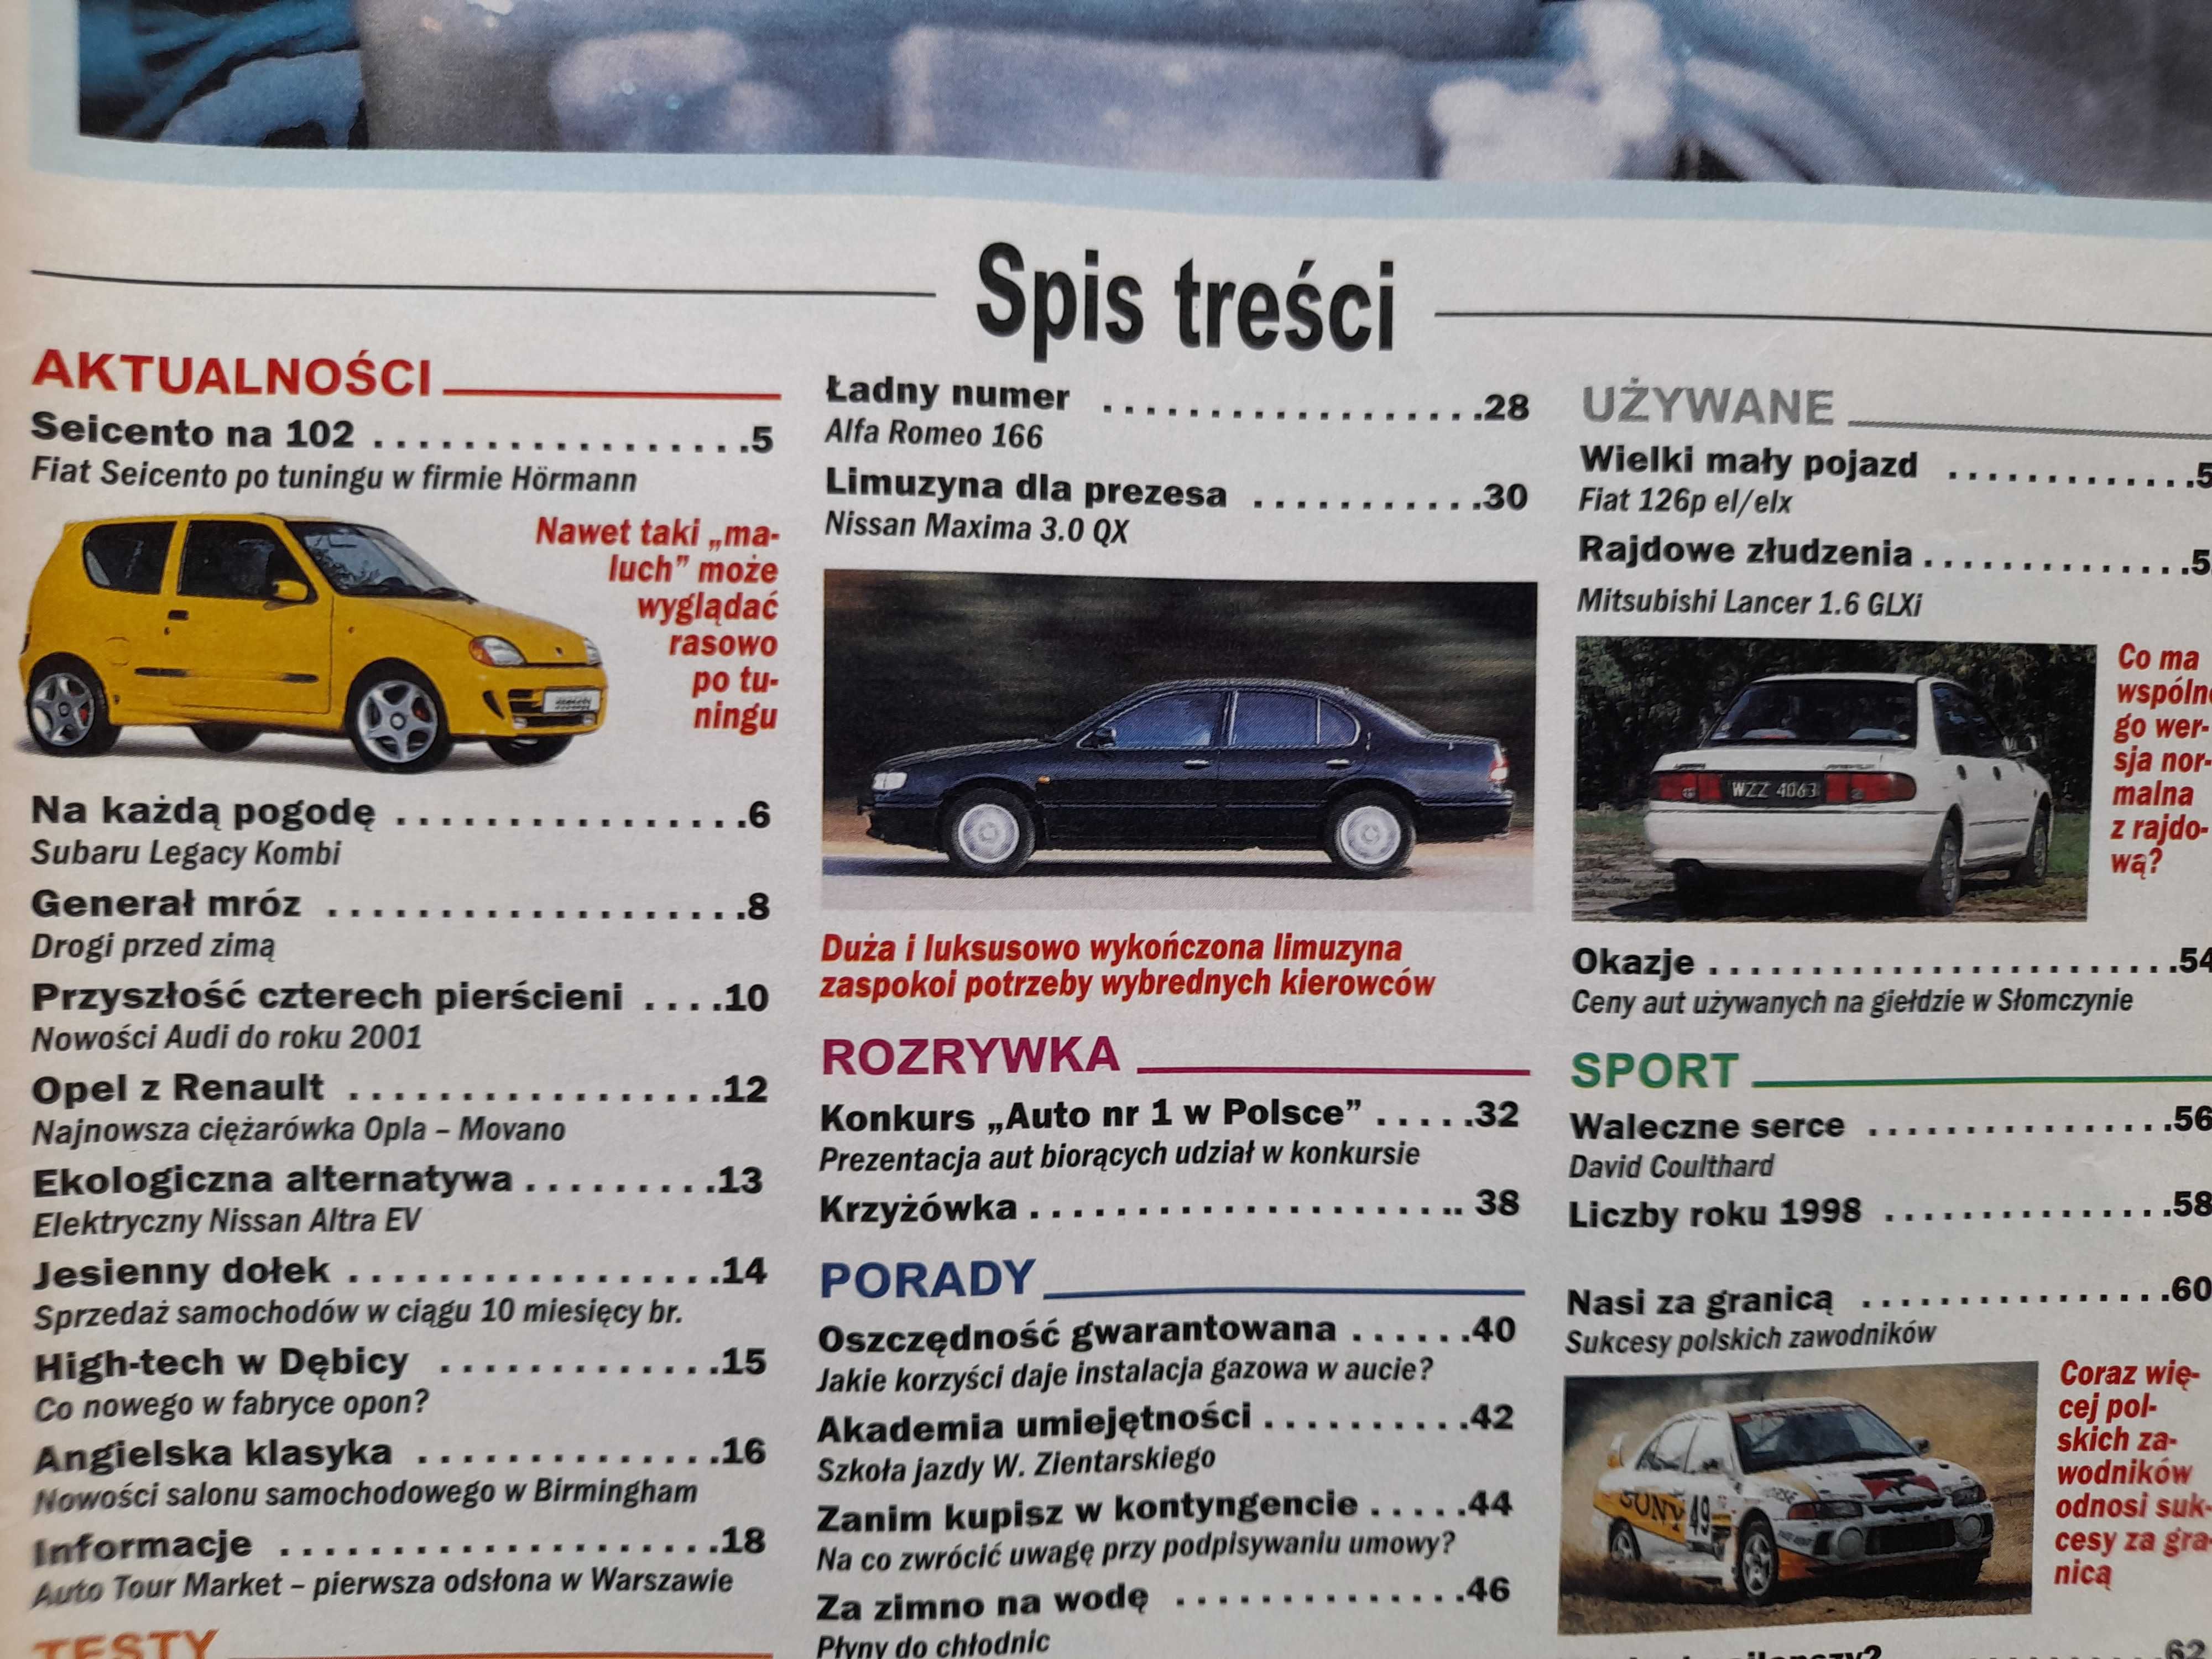 AŚ Seicento Hormann, Fiat 126p, Alfa 166, Legacy, Focus, Maxima